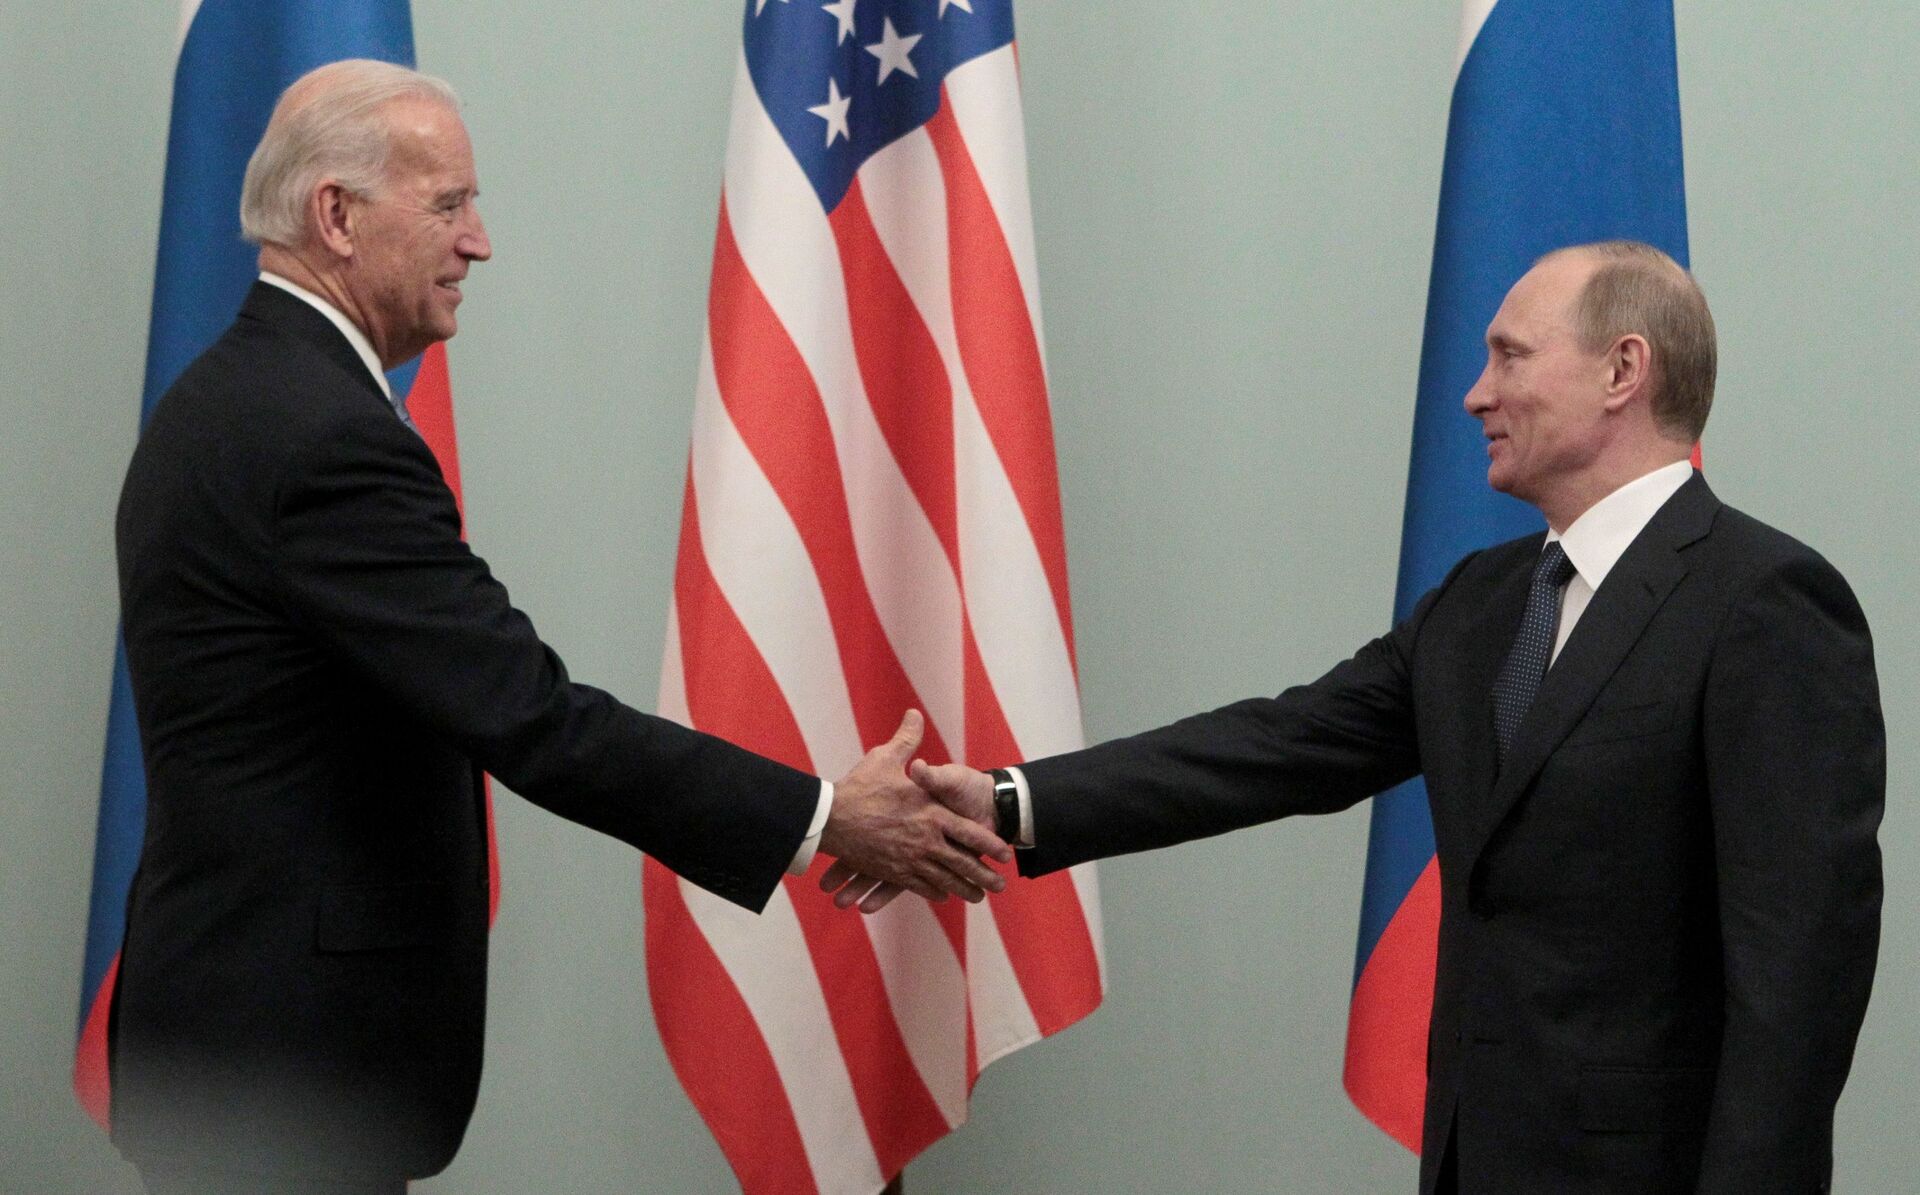 Biden Says Aims to Make Clear to Putin, China That US, EU United, G7 Will Act - Sputnik International, 1920, 09.06.2021